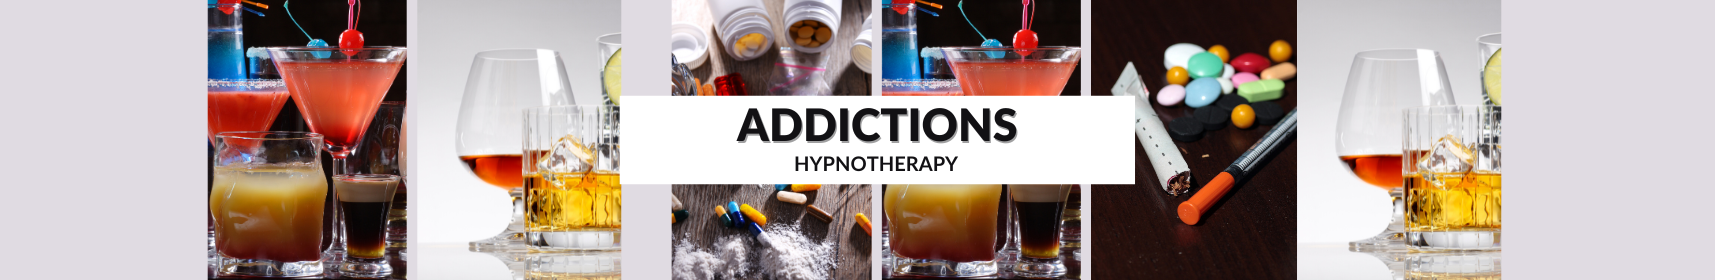 Addictions hypnosis